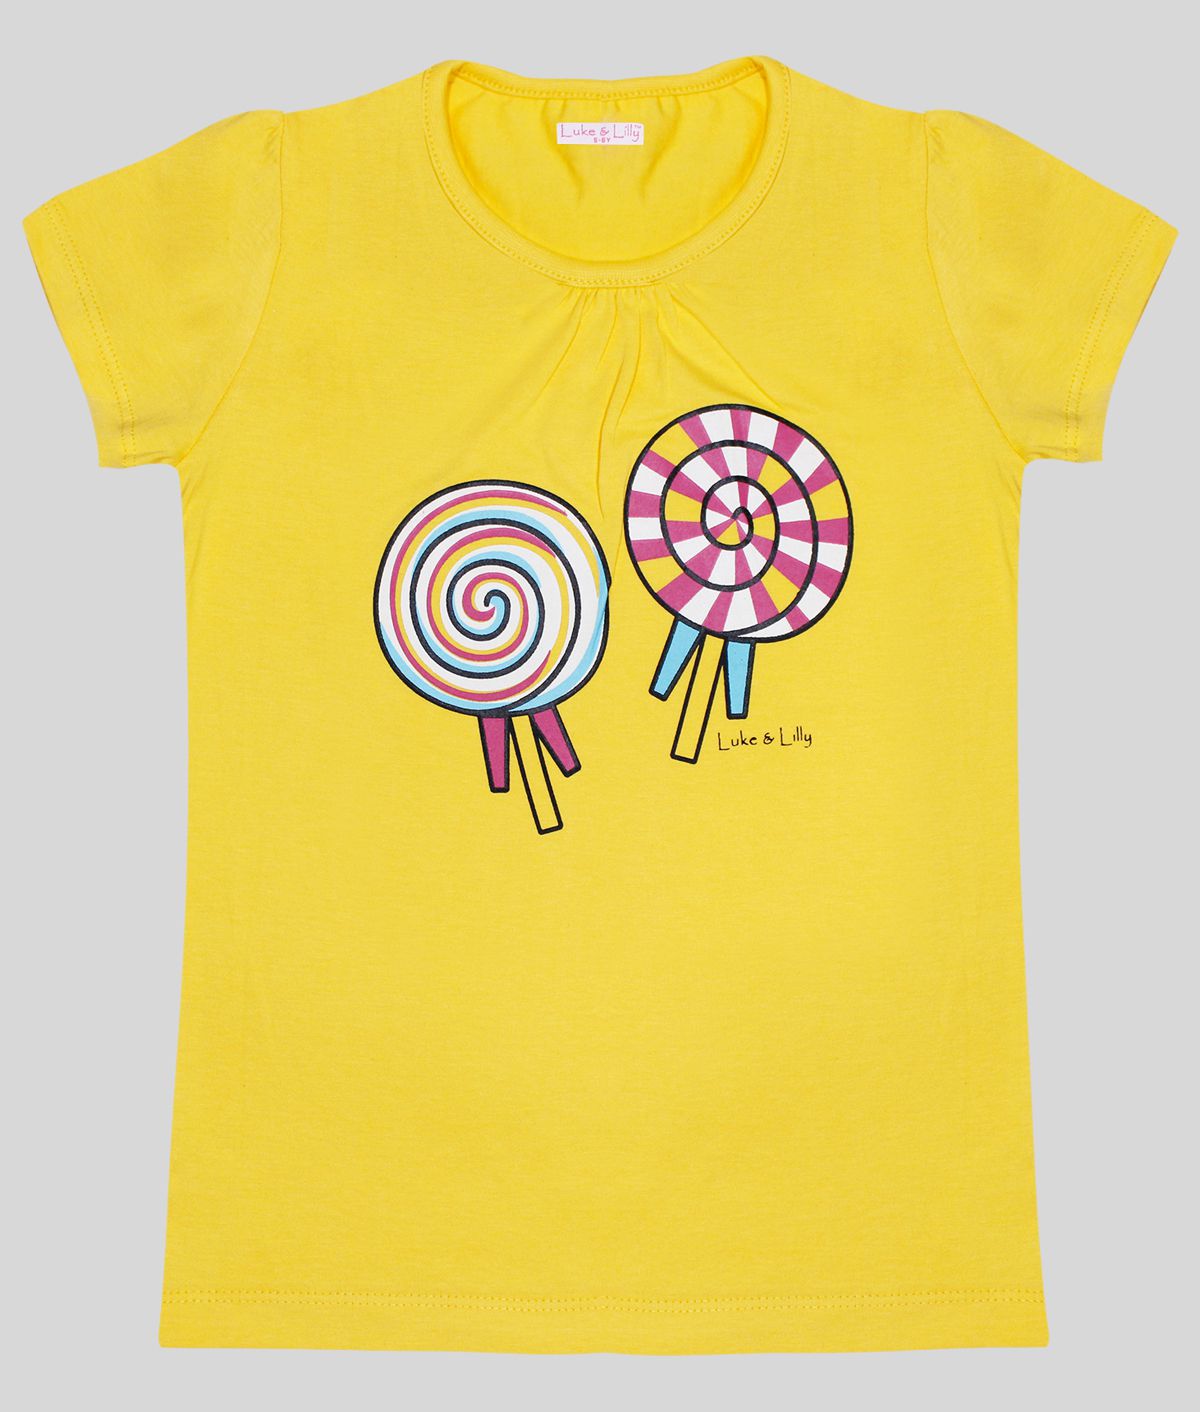     			Luke and Lilly - Yellow Cotton Girls T-Shirt ( Pack of 1 )